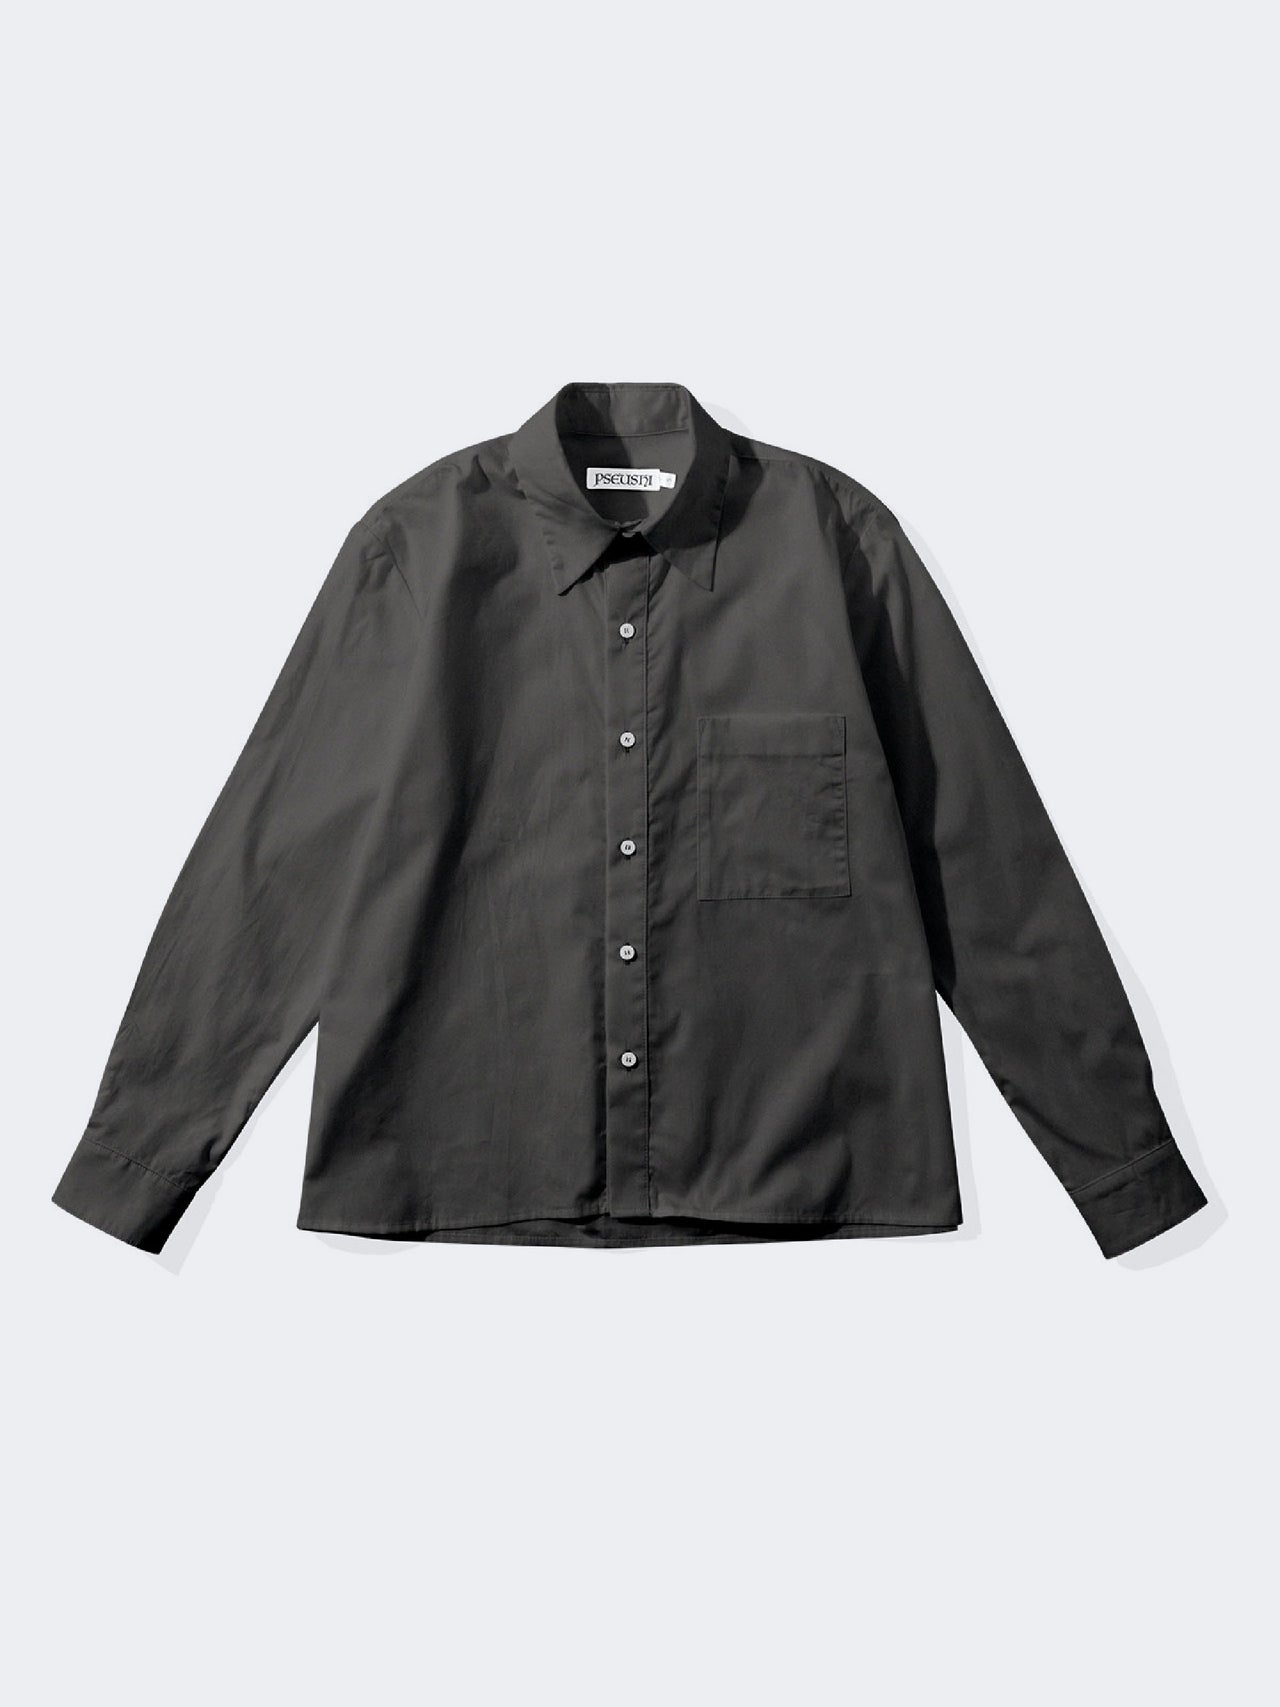 PSEUSHI Long Sleeve Shirt Charcoal